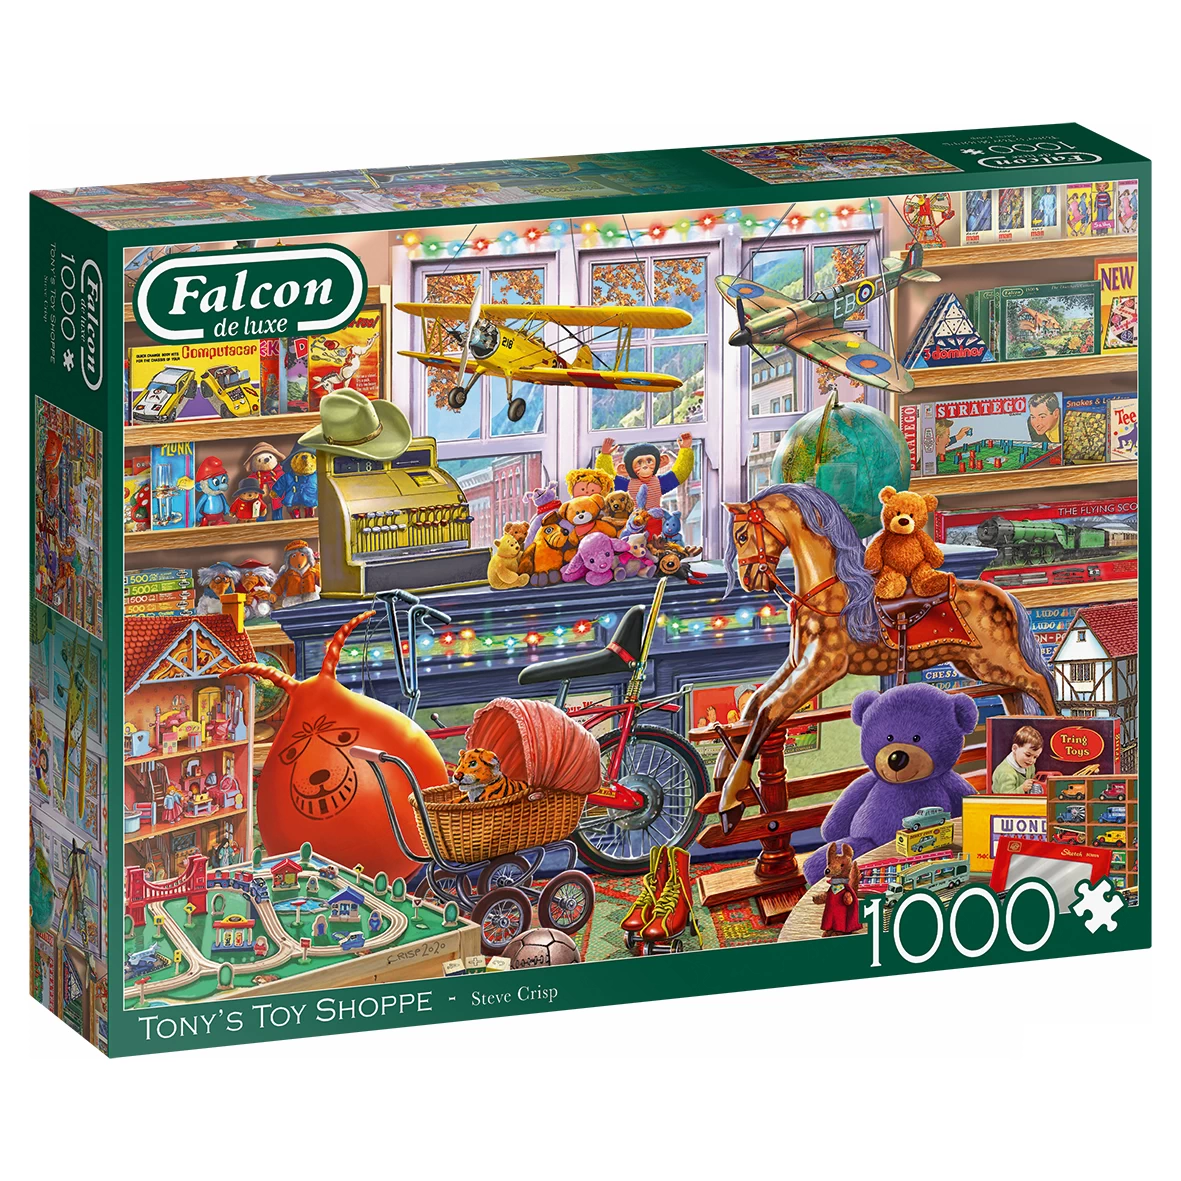 Puzzle - Tonys Toy Shoppe (Falcon de Luxe) - 1000 Teile